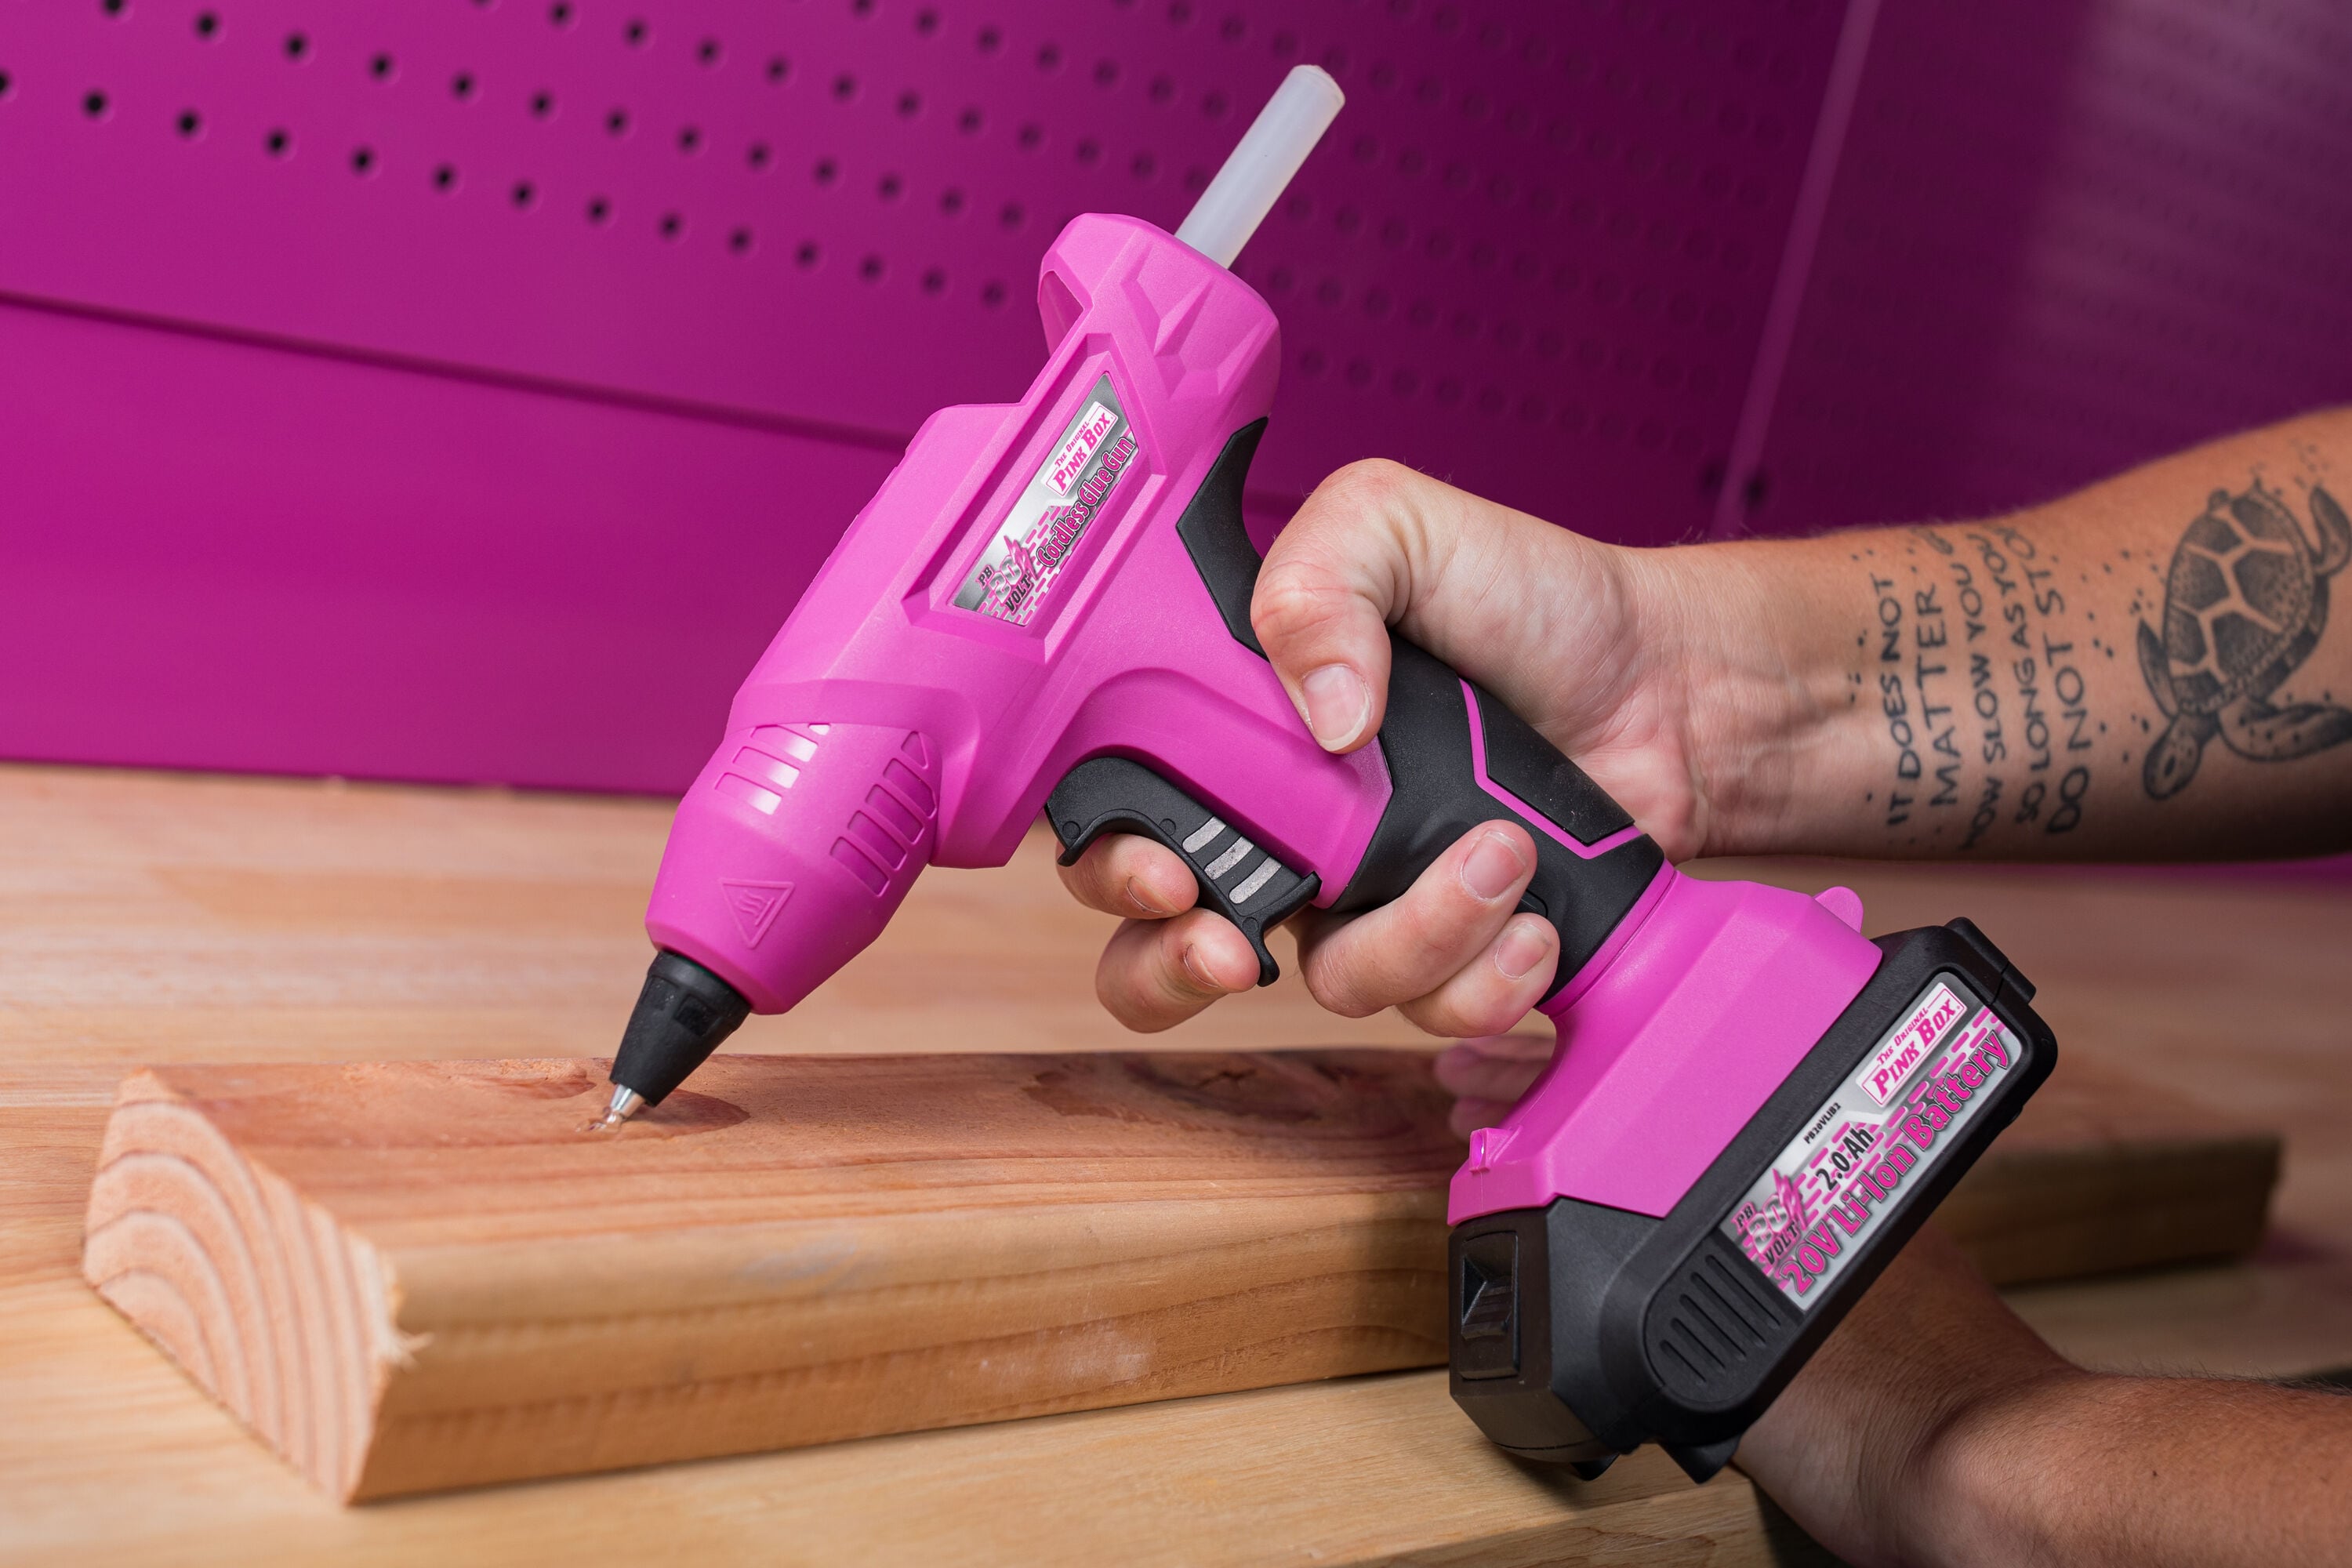  Svartur Cordless Hot Glue Gun Kit with Case, Pink Glue